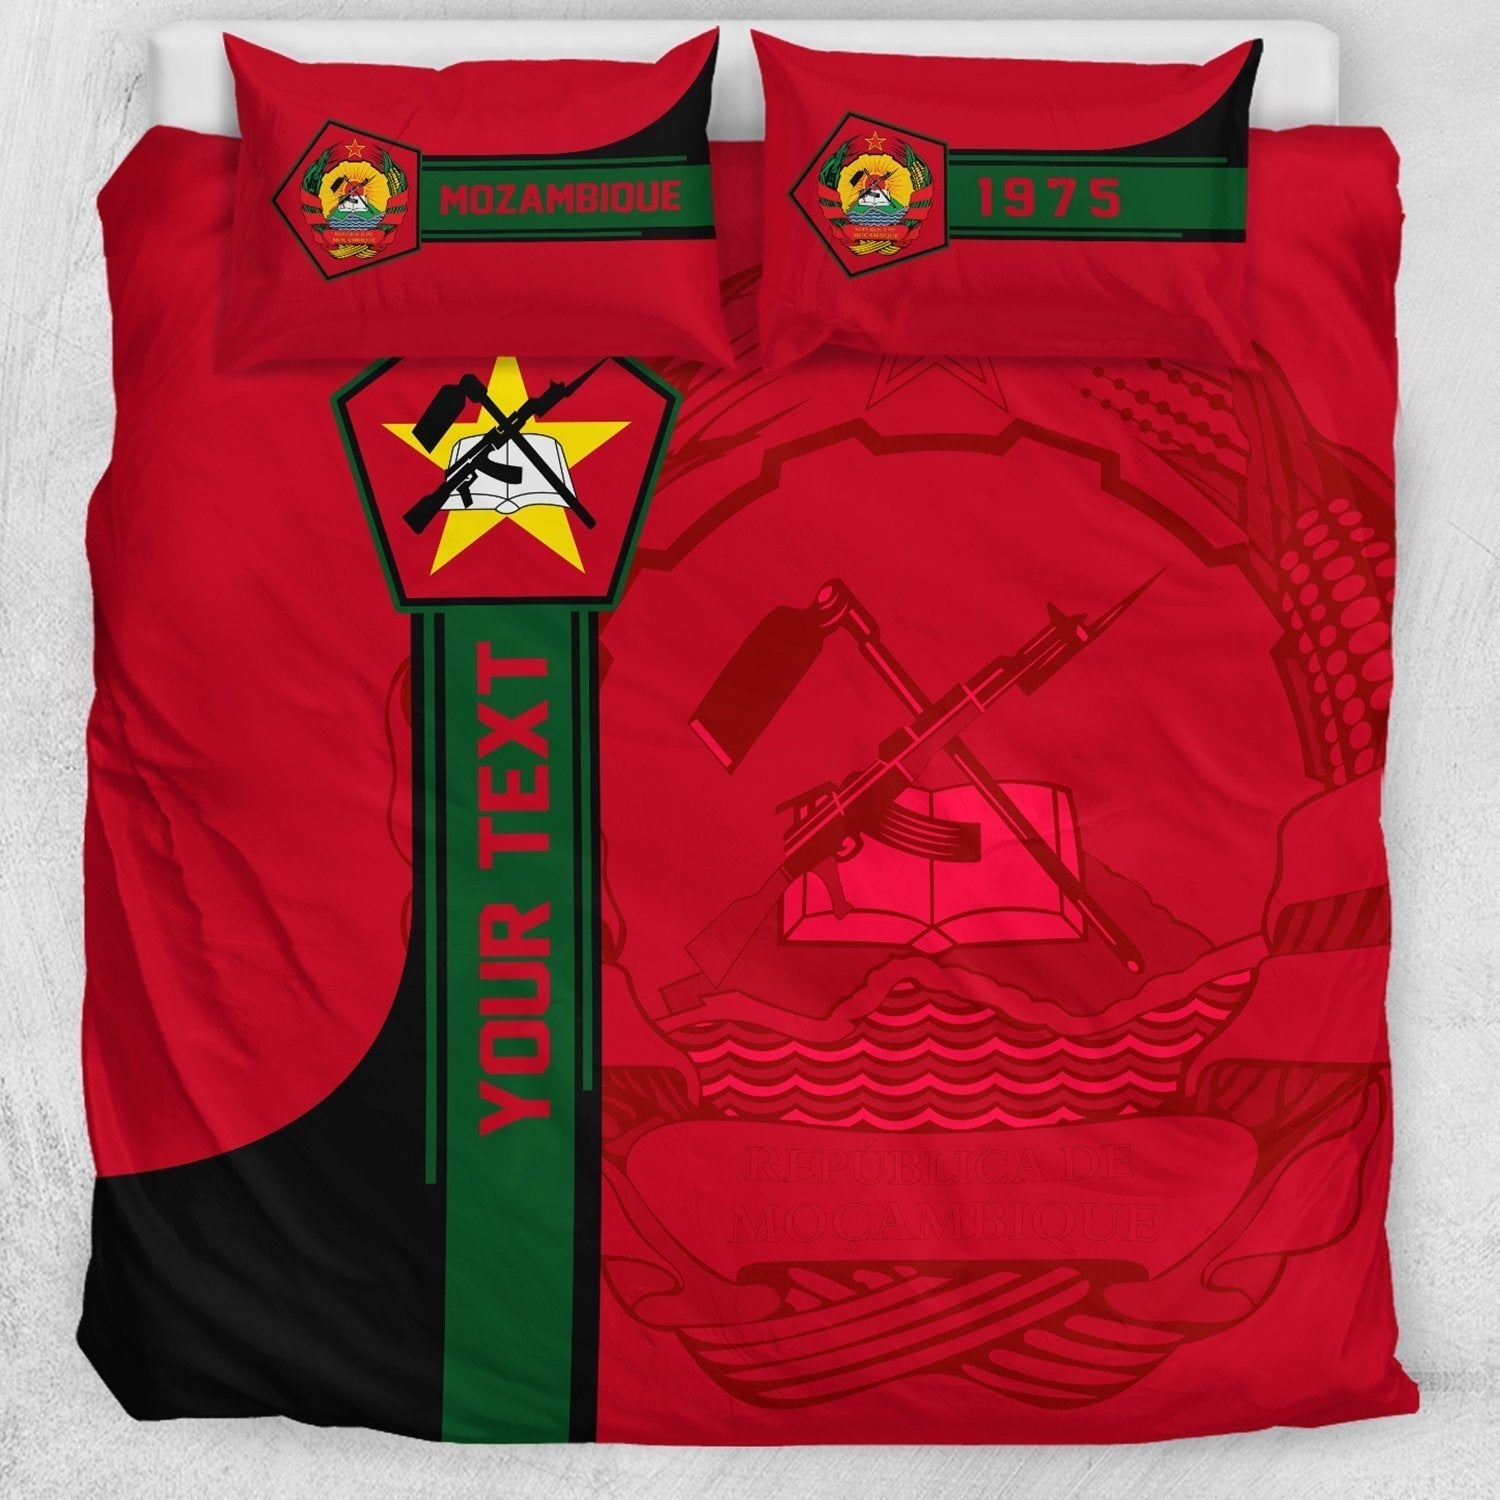 custom-african-bedding-set-mozambique-duvet-cover-pillow-cases-pentagon-style